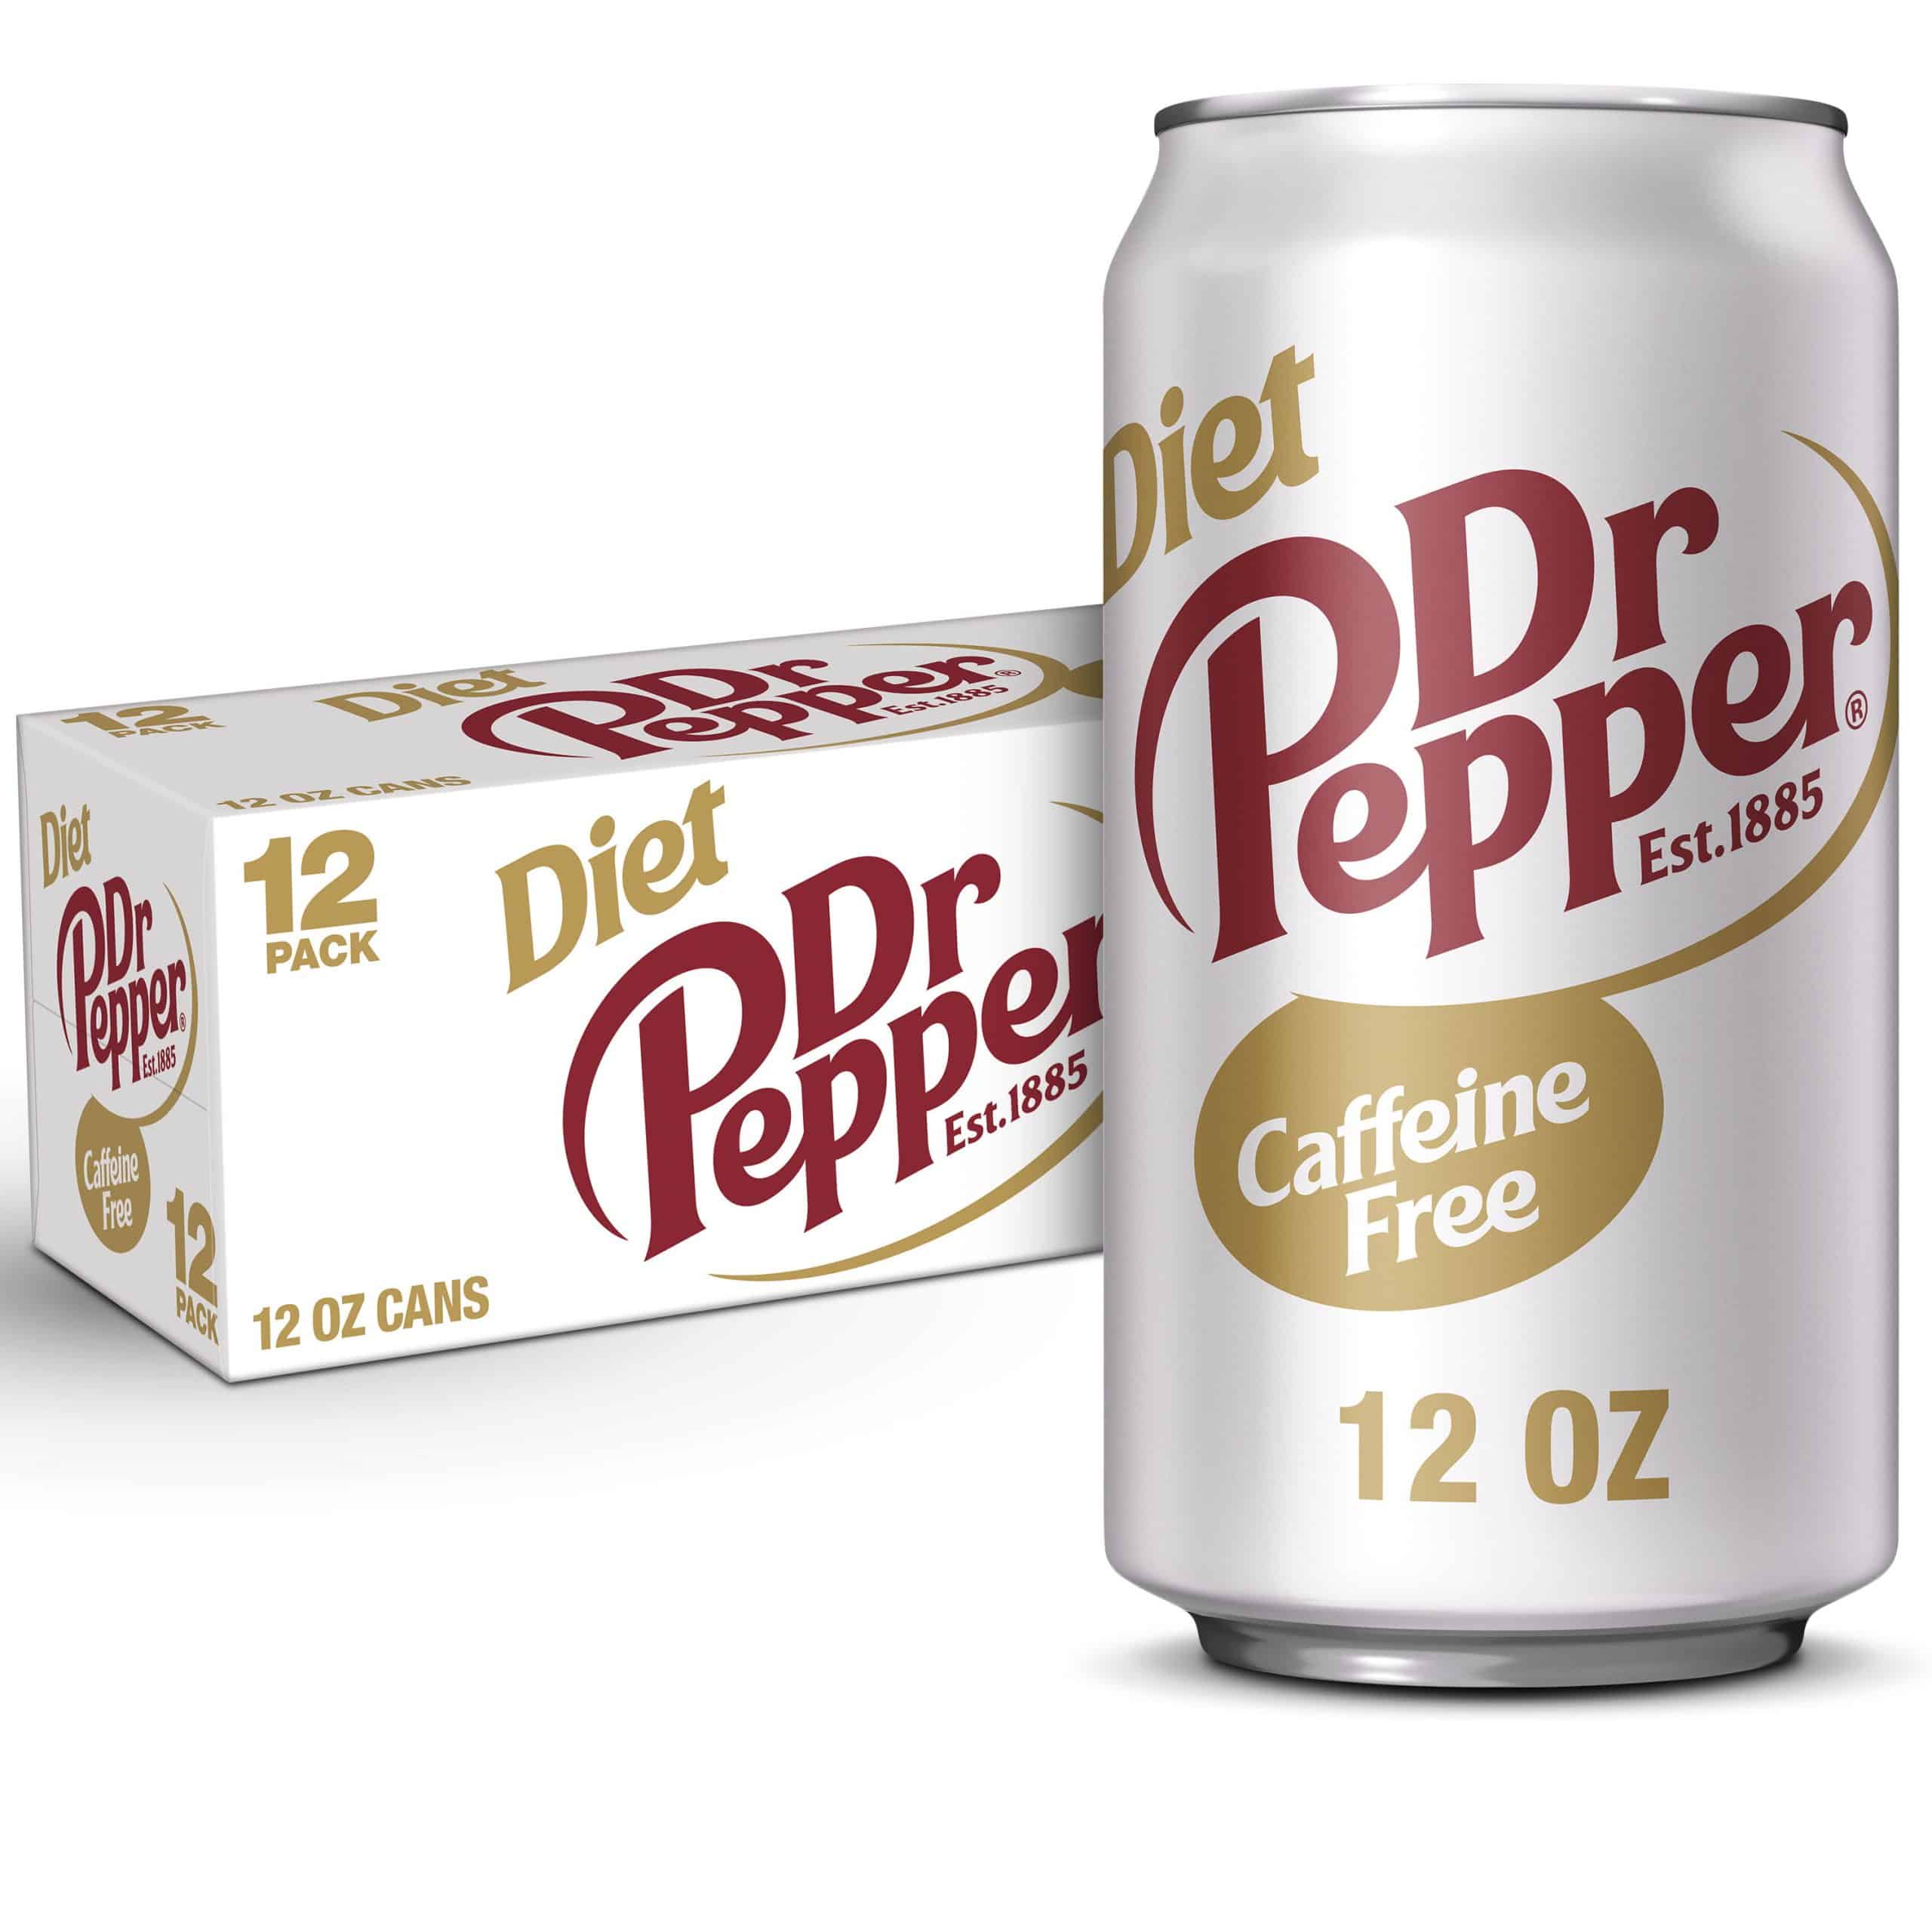 Caffeine Free Diet Dr Pepper, 12 fl oz cans, 12 pack